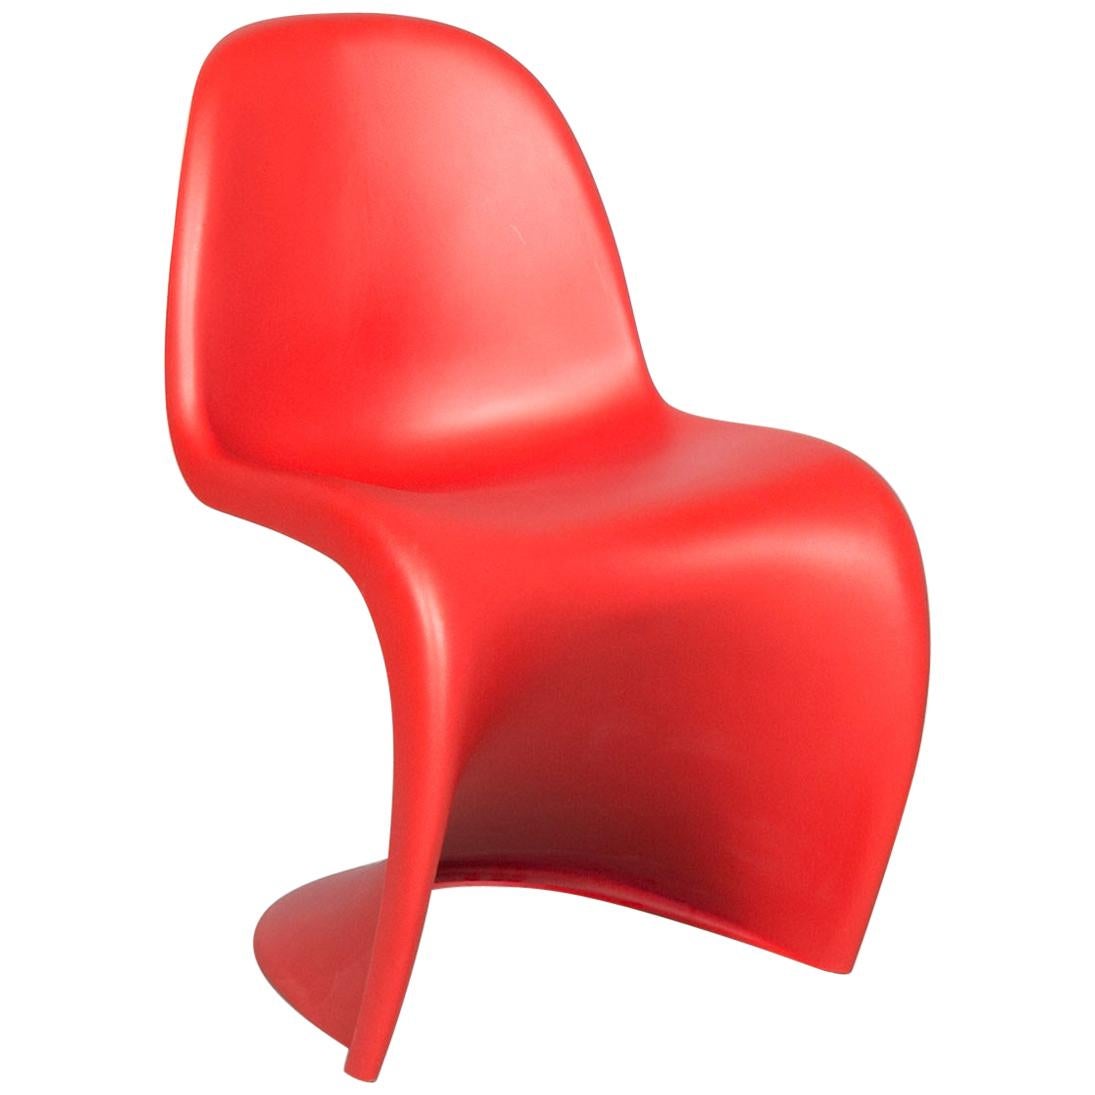 Vitra Panton Chair Designer Plastic Armchair Red by Verner Panton Polyproypylen For Sale